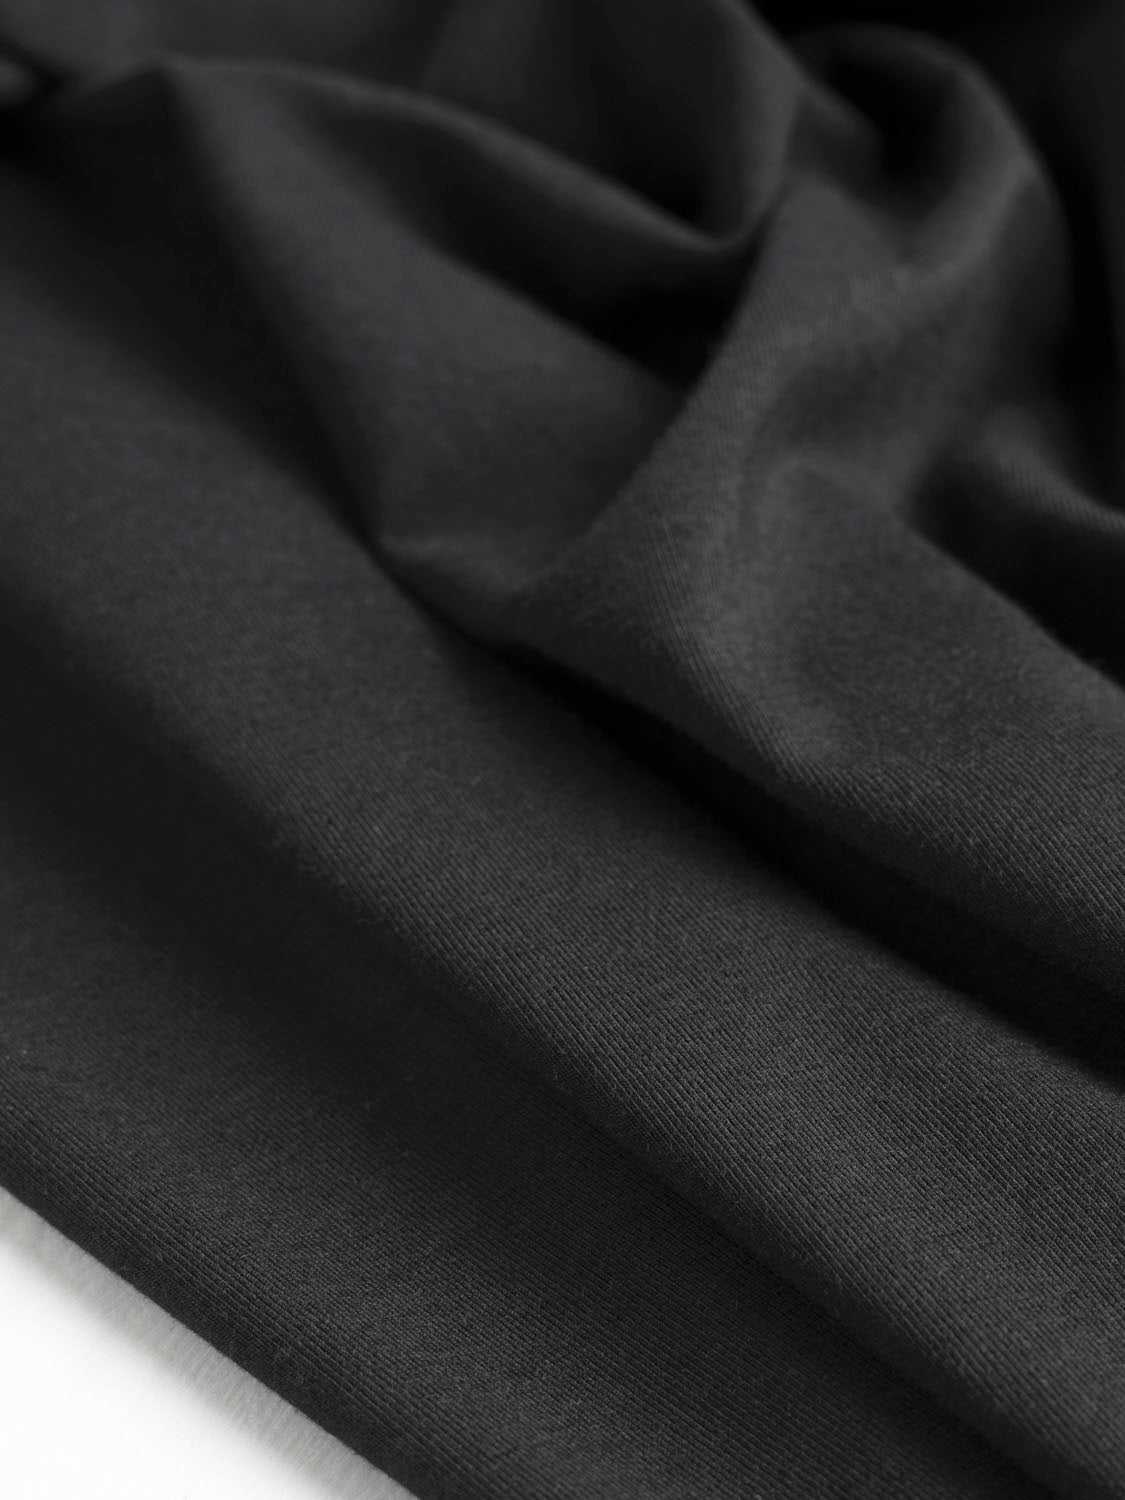 Stretchy cotton spandex / Black Plain / 65” width / fabric sold